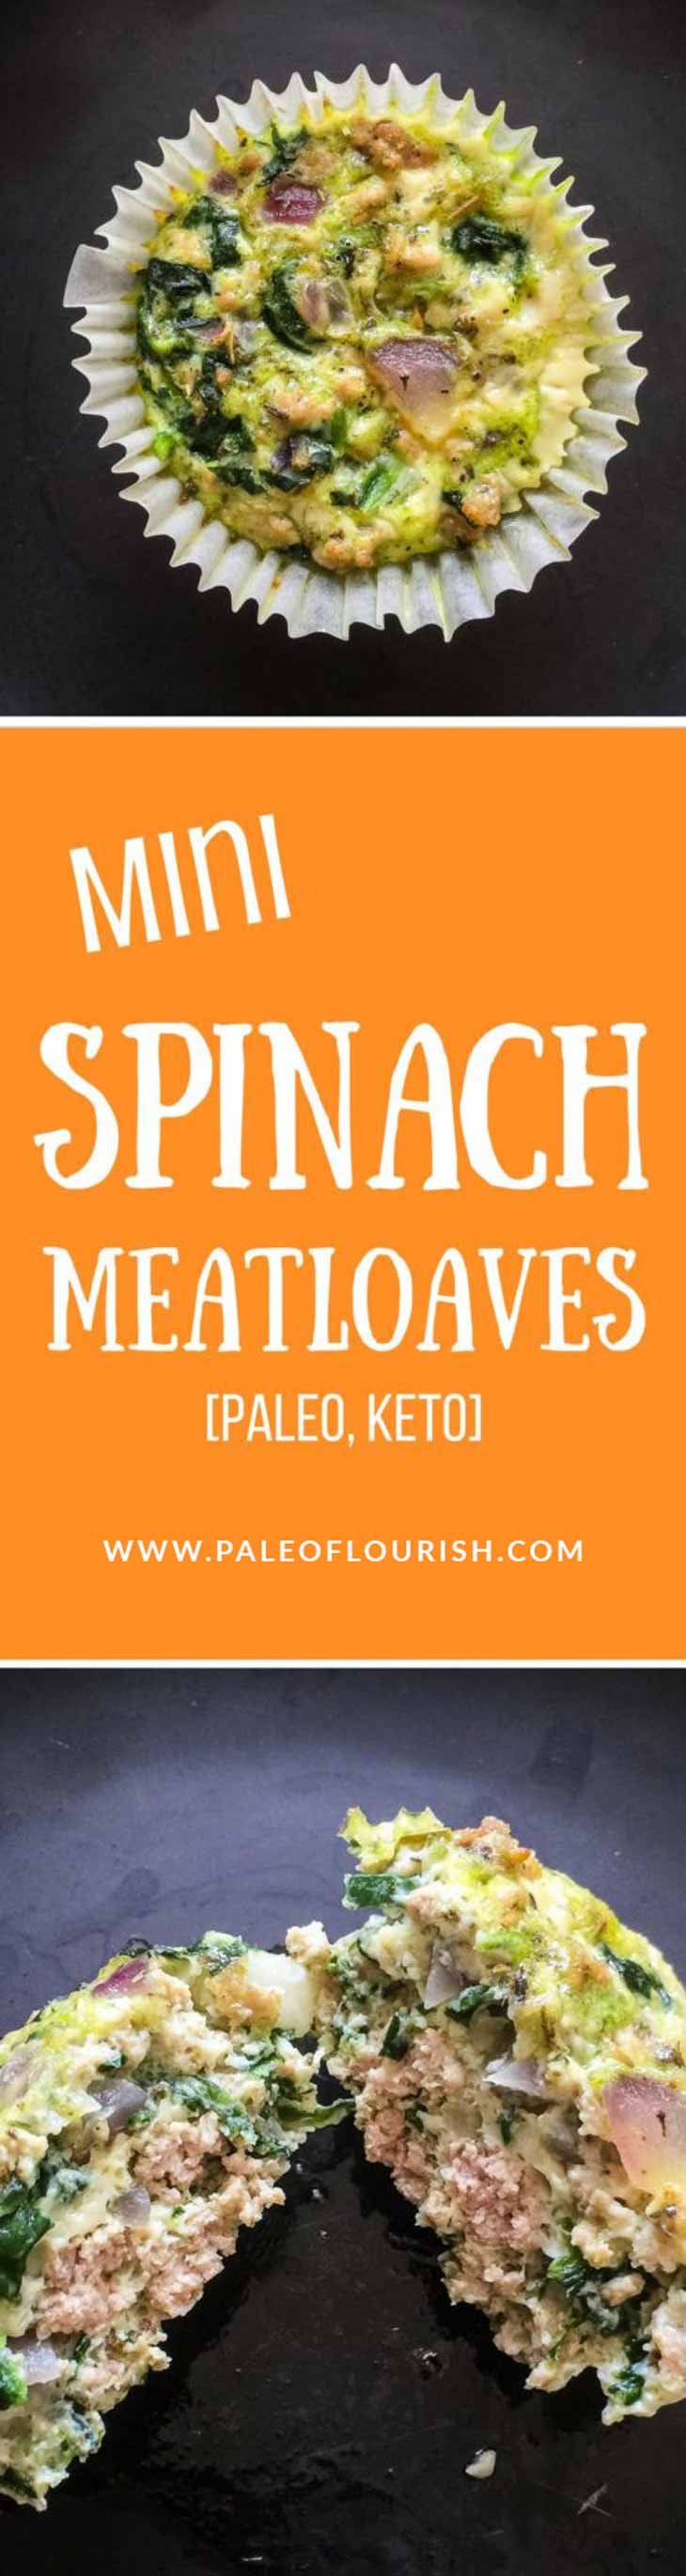 Mini Spinach Meatloaves Recipe [Paleo, Keto] #paleo #keto #recipes - https://paleoflourish.com/mini-spinach-meatloaves-recipe